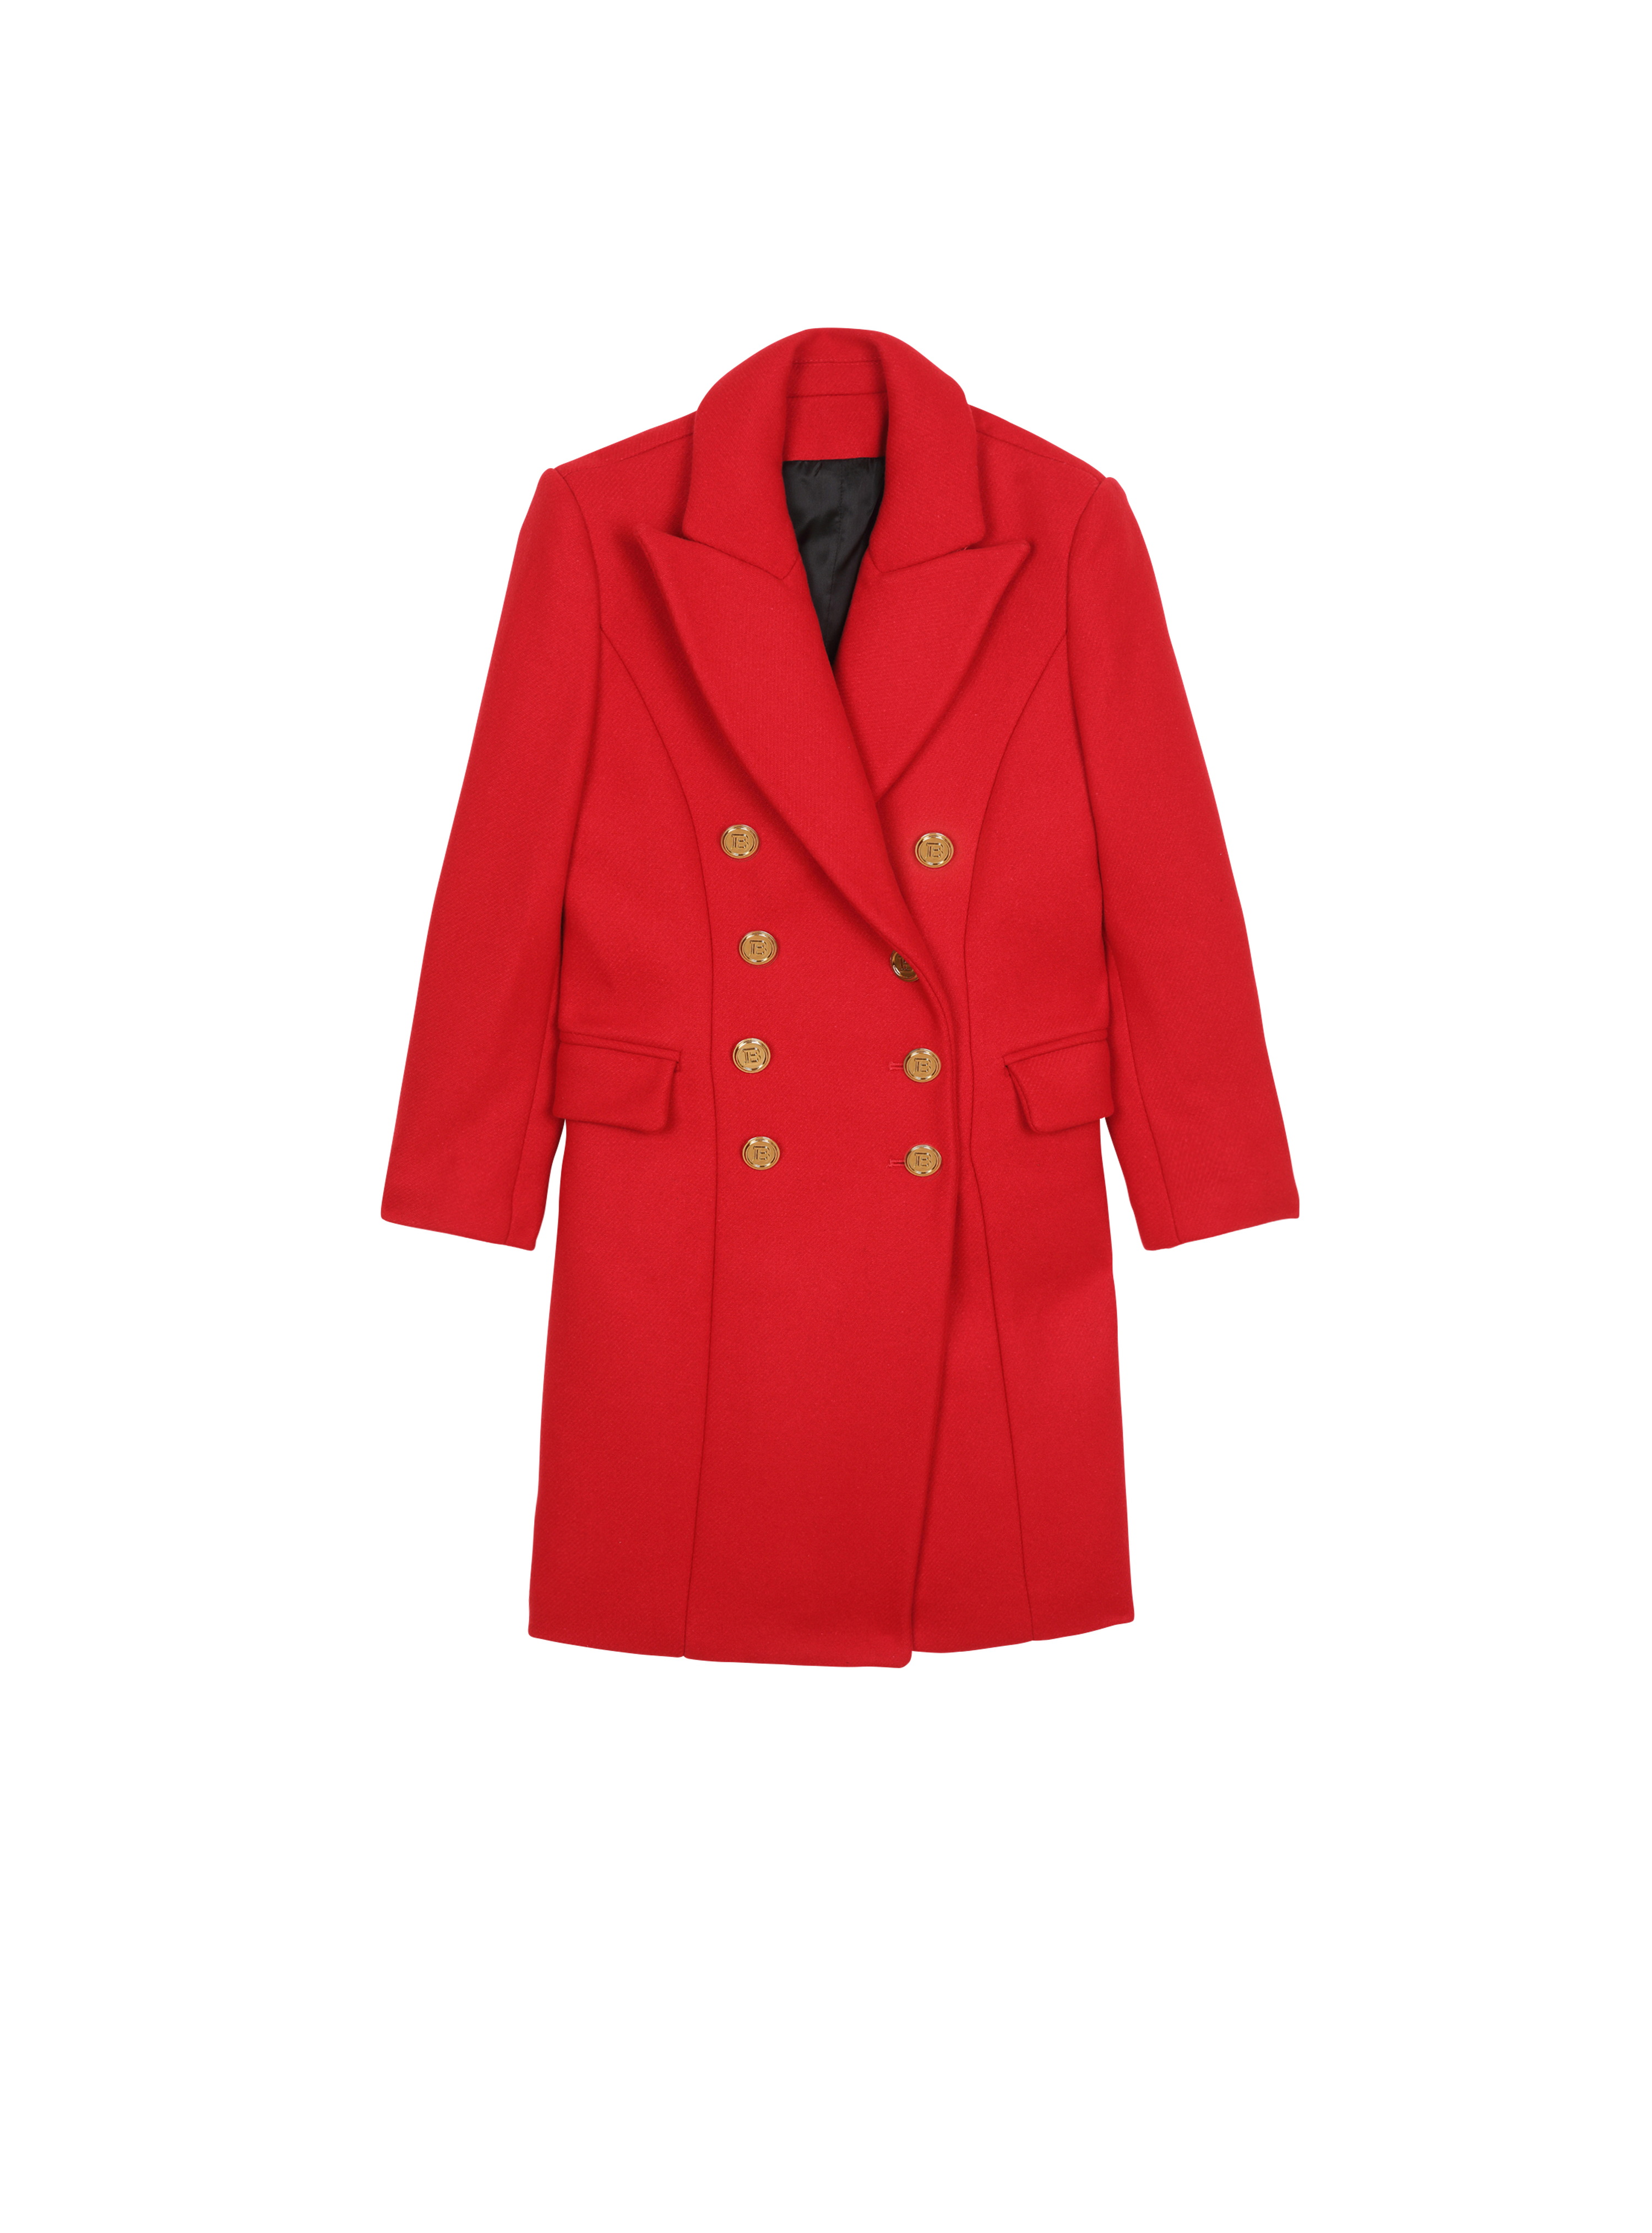 Wool coat, red